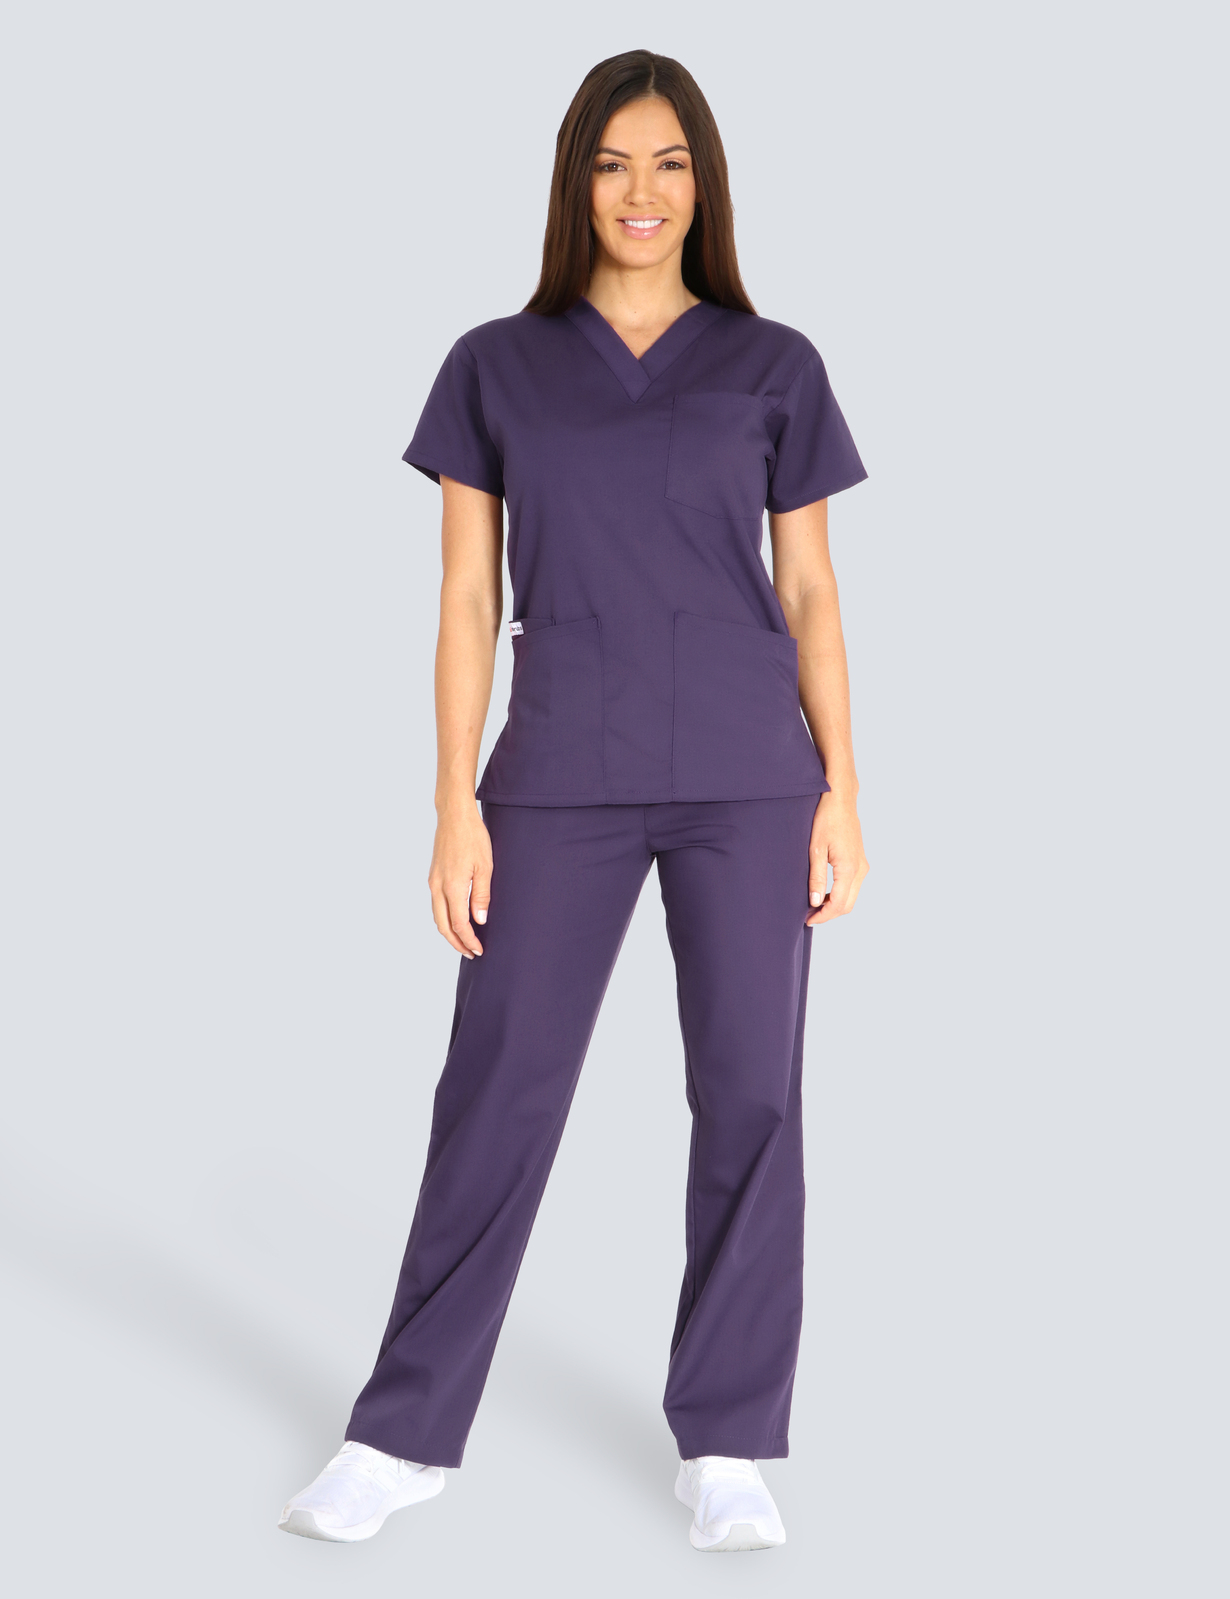 Toowoomba Hospital Administration Officer Uniform Set Bundle (4 Pocket Top and Cargo Pants in Aubergine incl Logo)